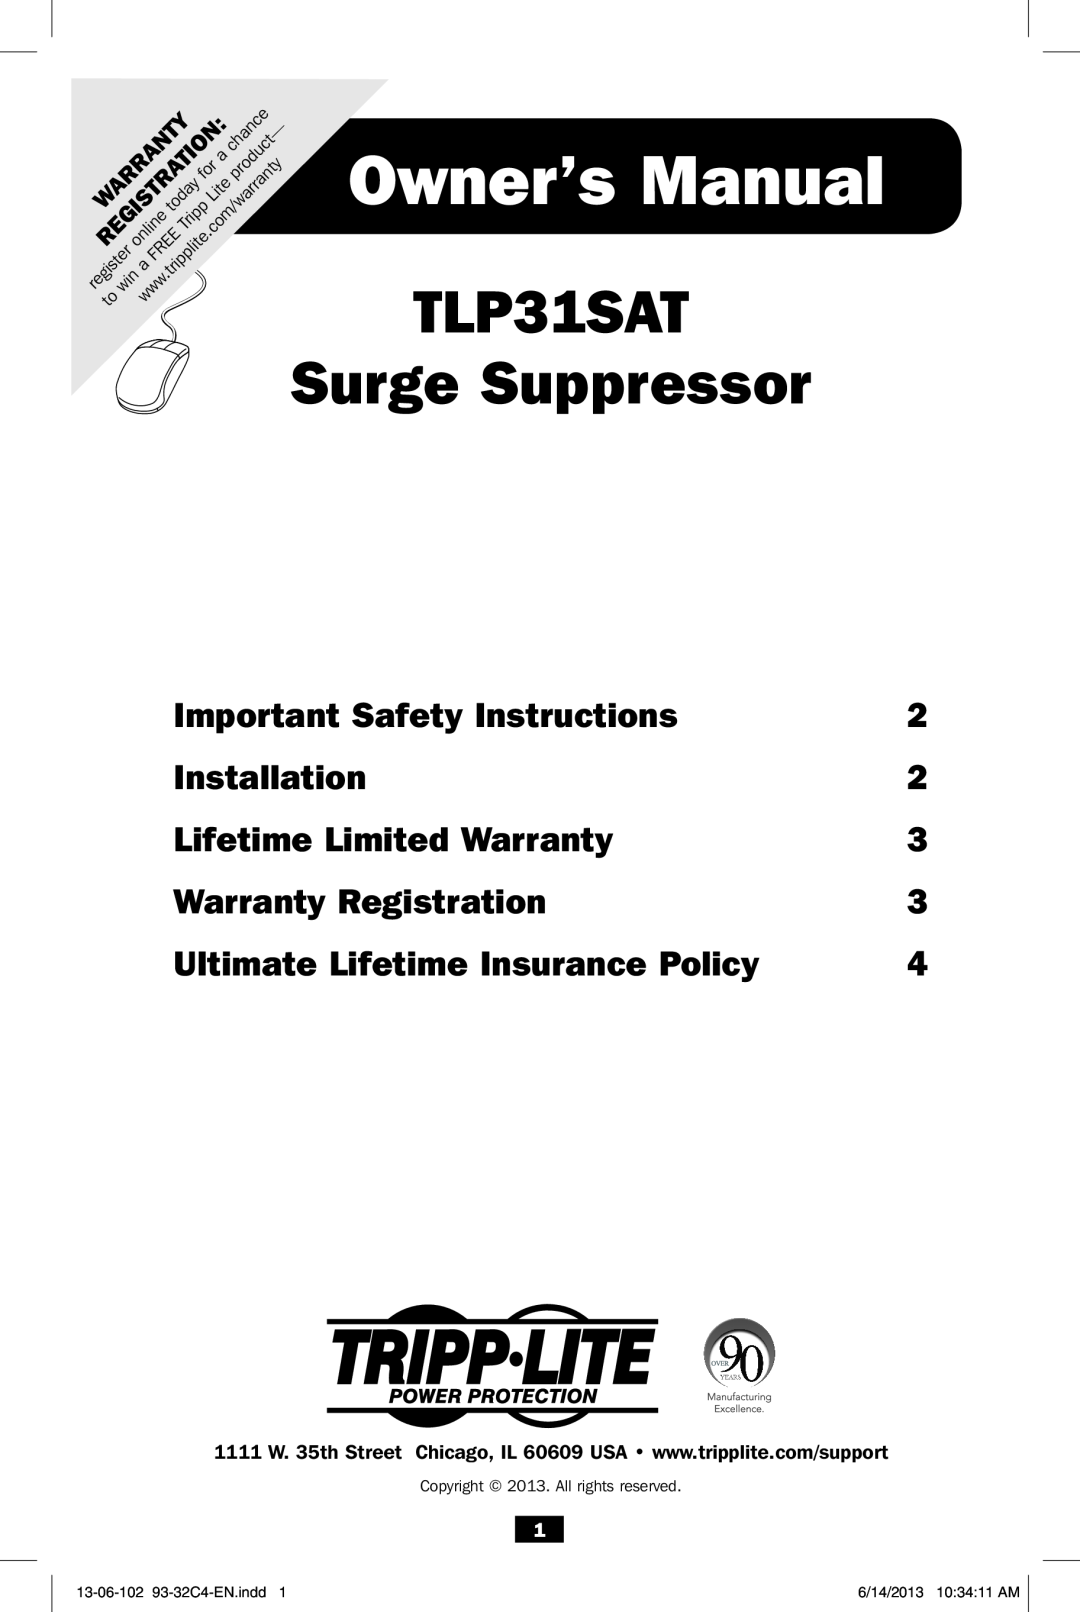 Tripp Lite owner manual TLP31SAT Surge Suppressor, Important Safety Instructions, Installation, Warranty Registration 